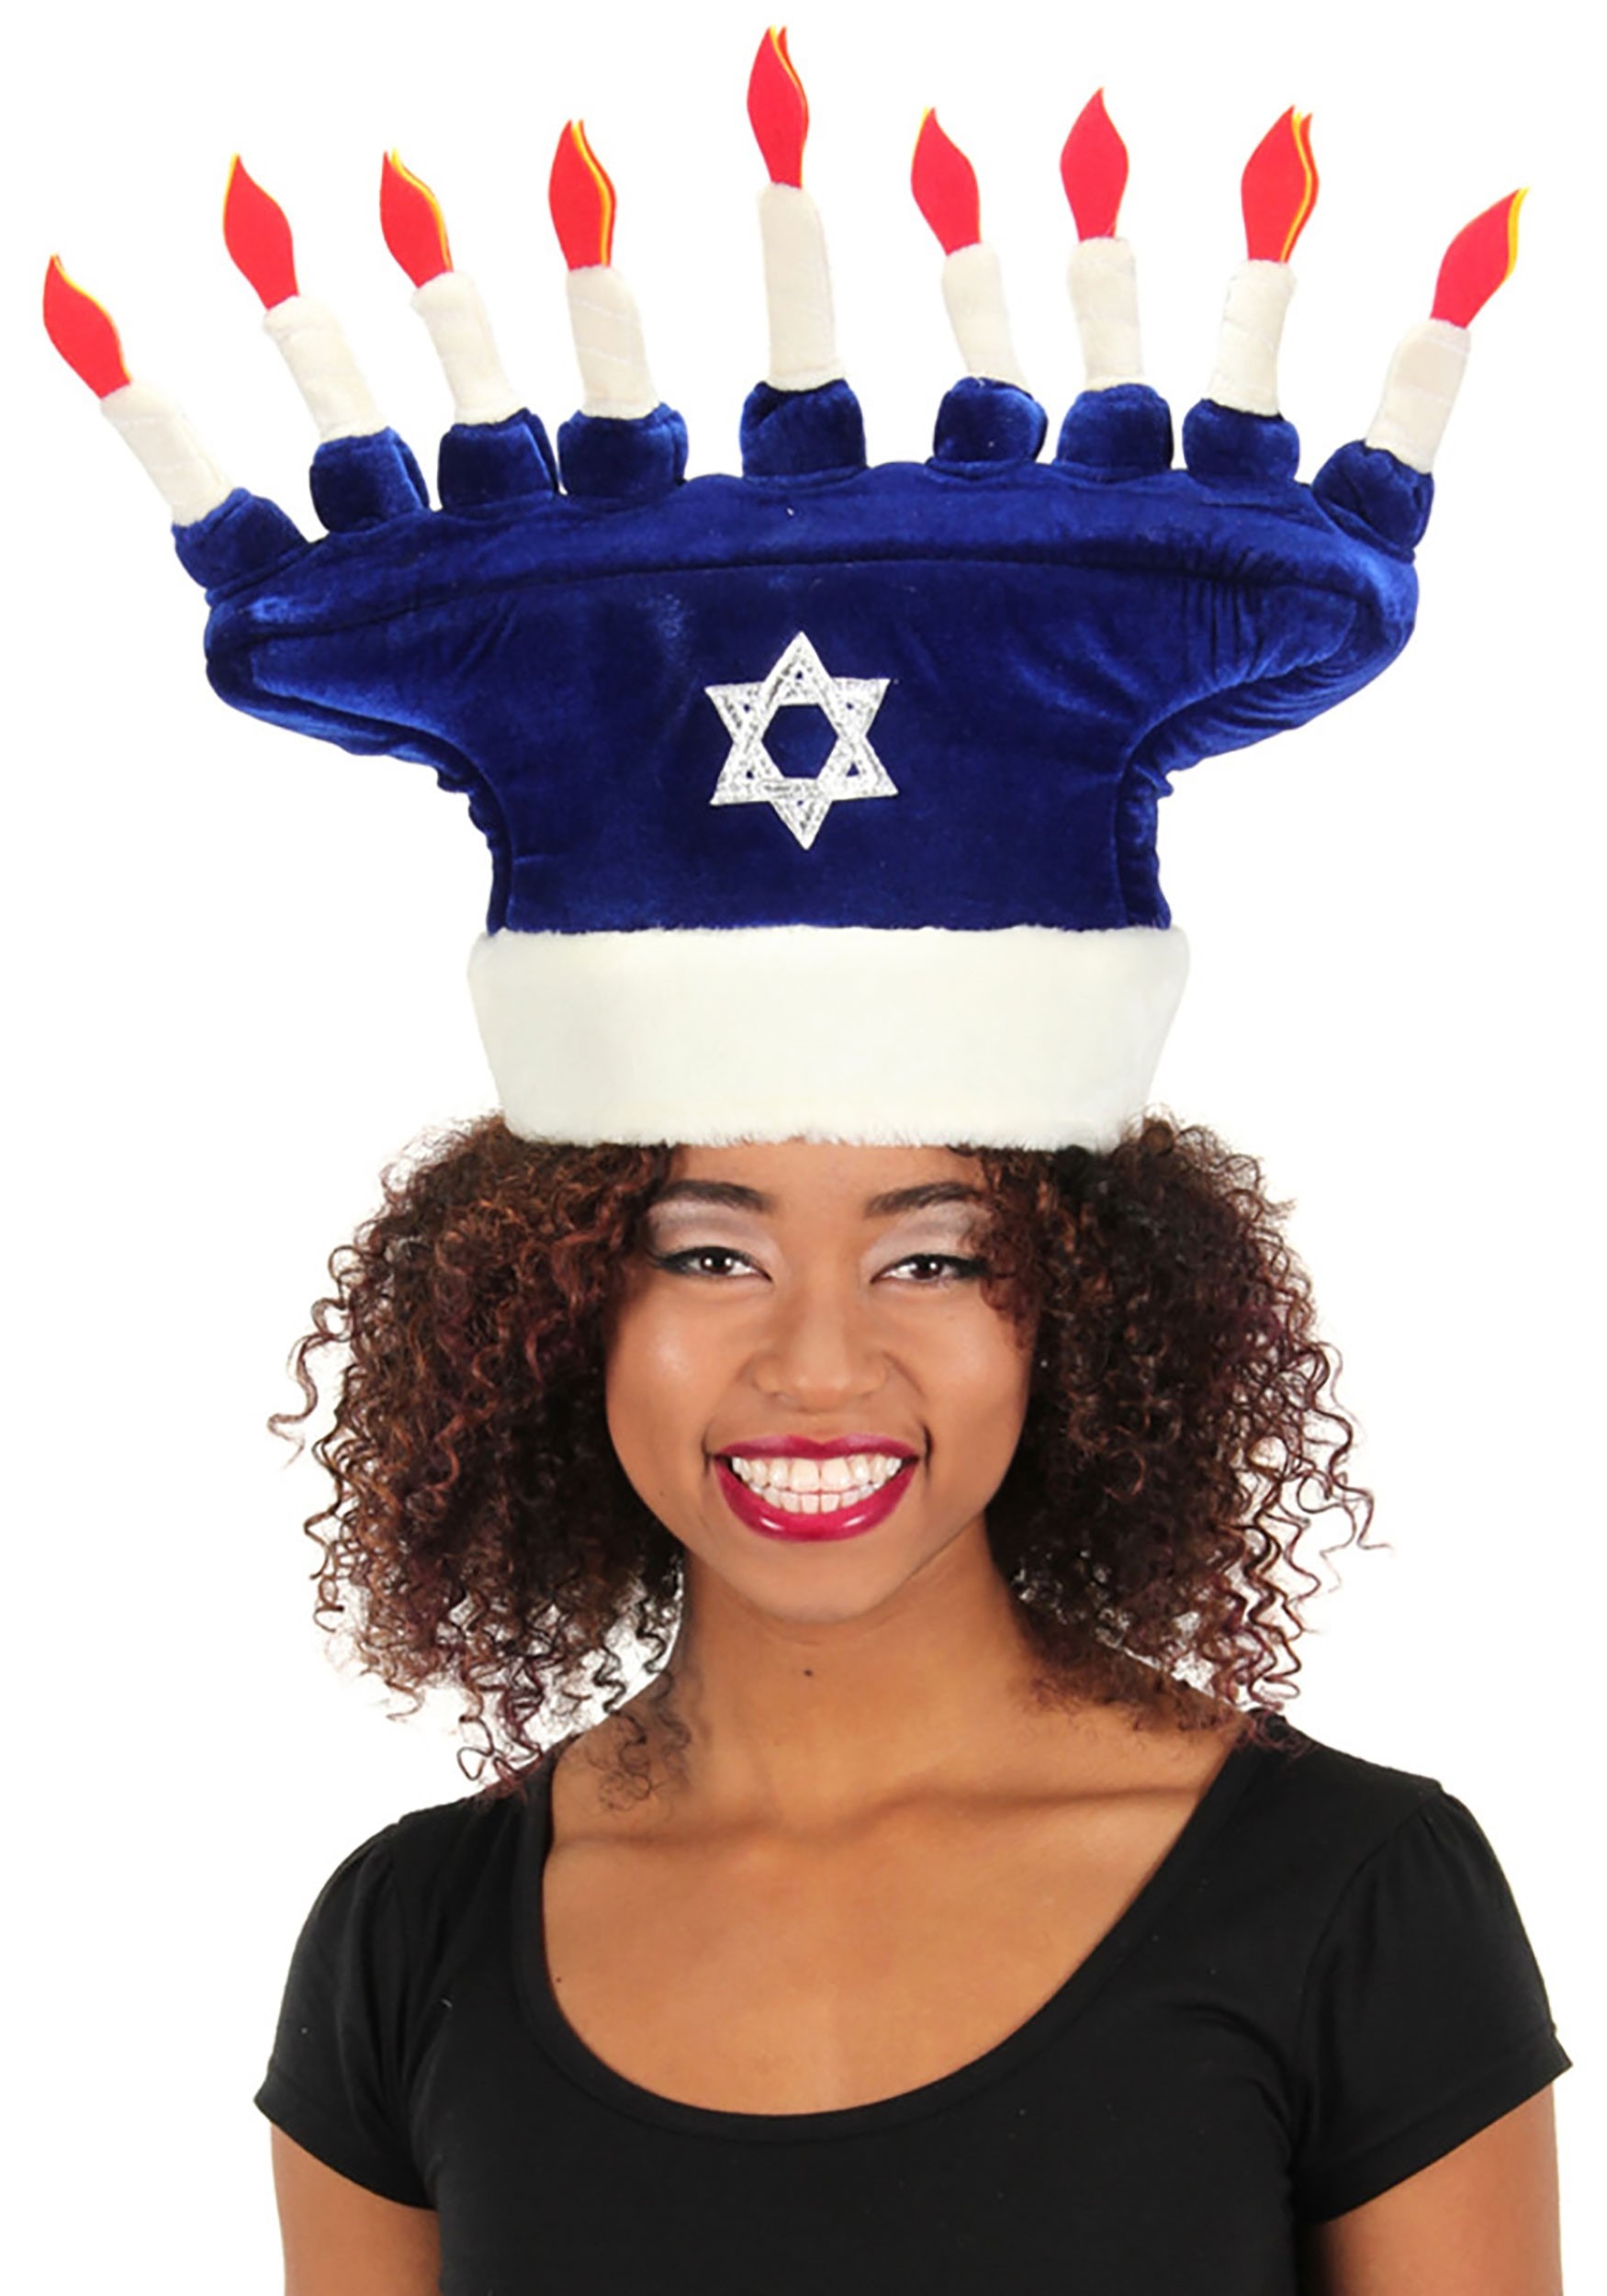 Happy Chanukah Plush Costume Hat